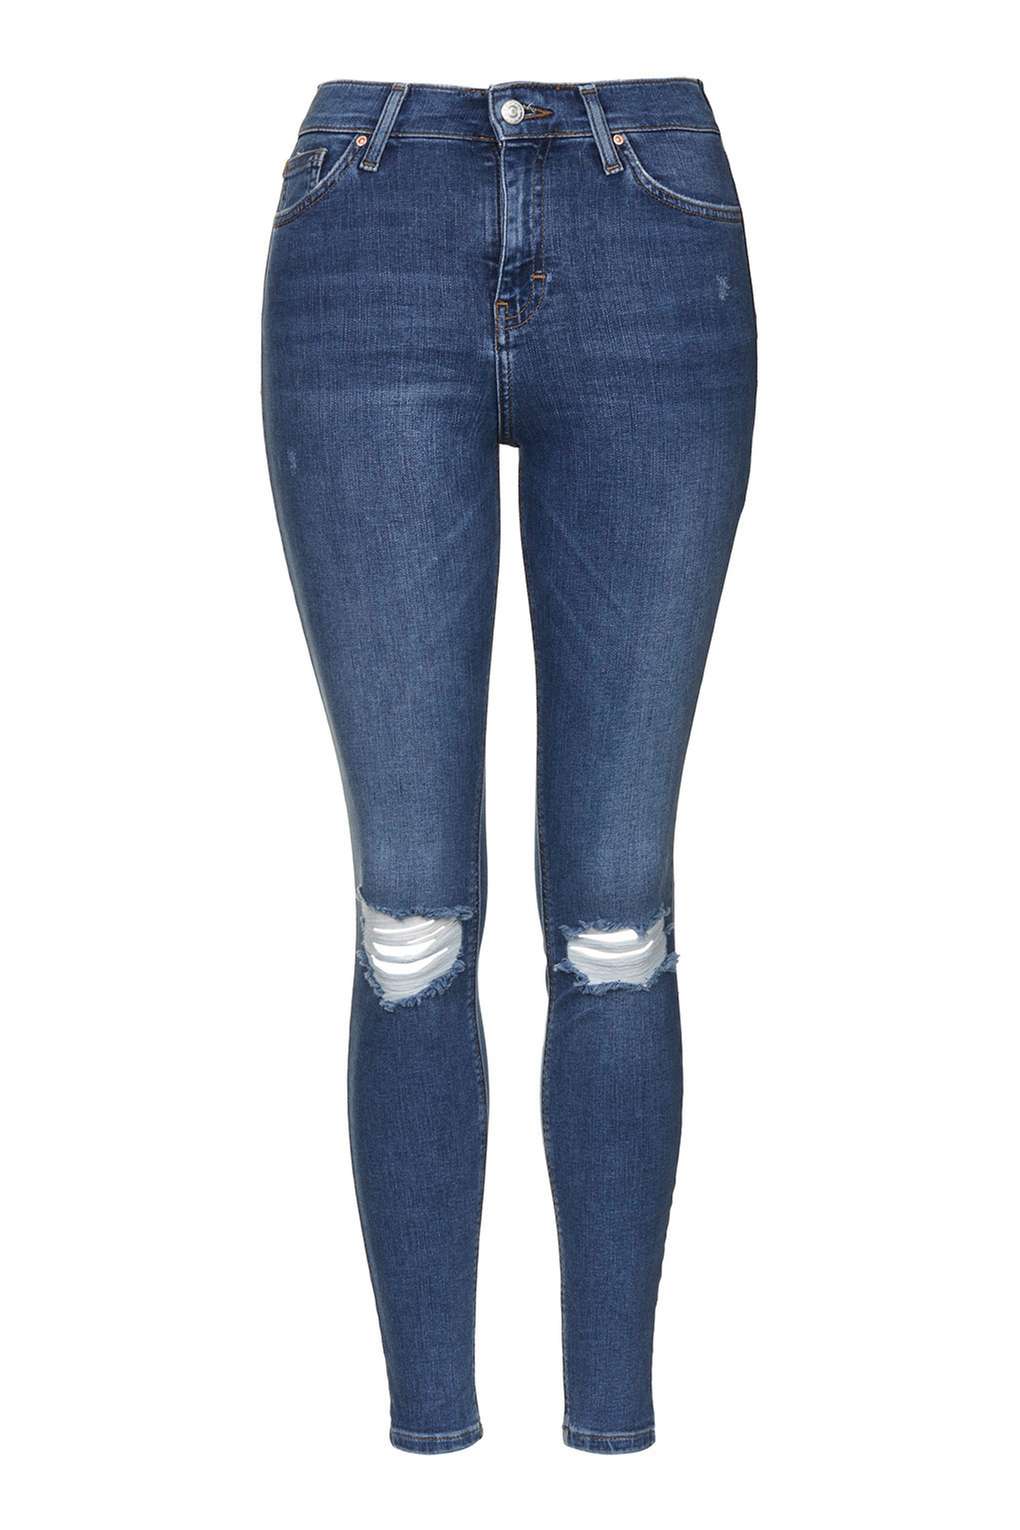 Khloe Kardashian Topshop jeans